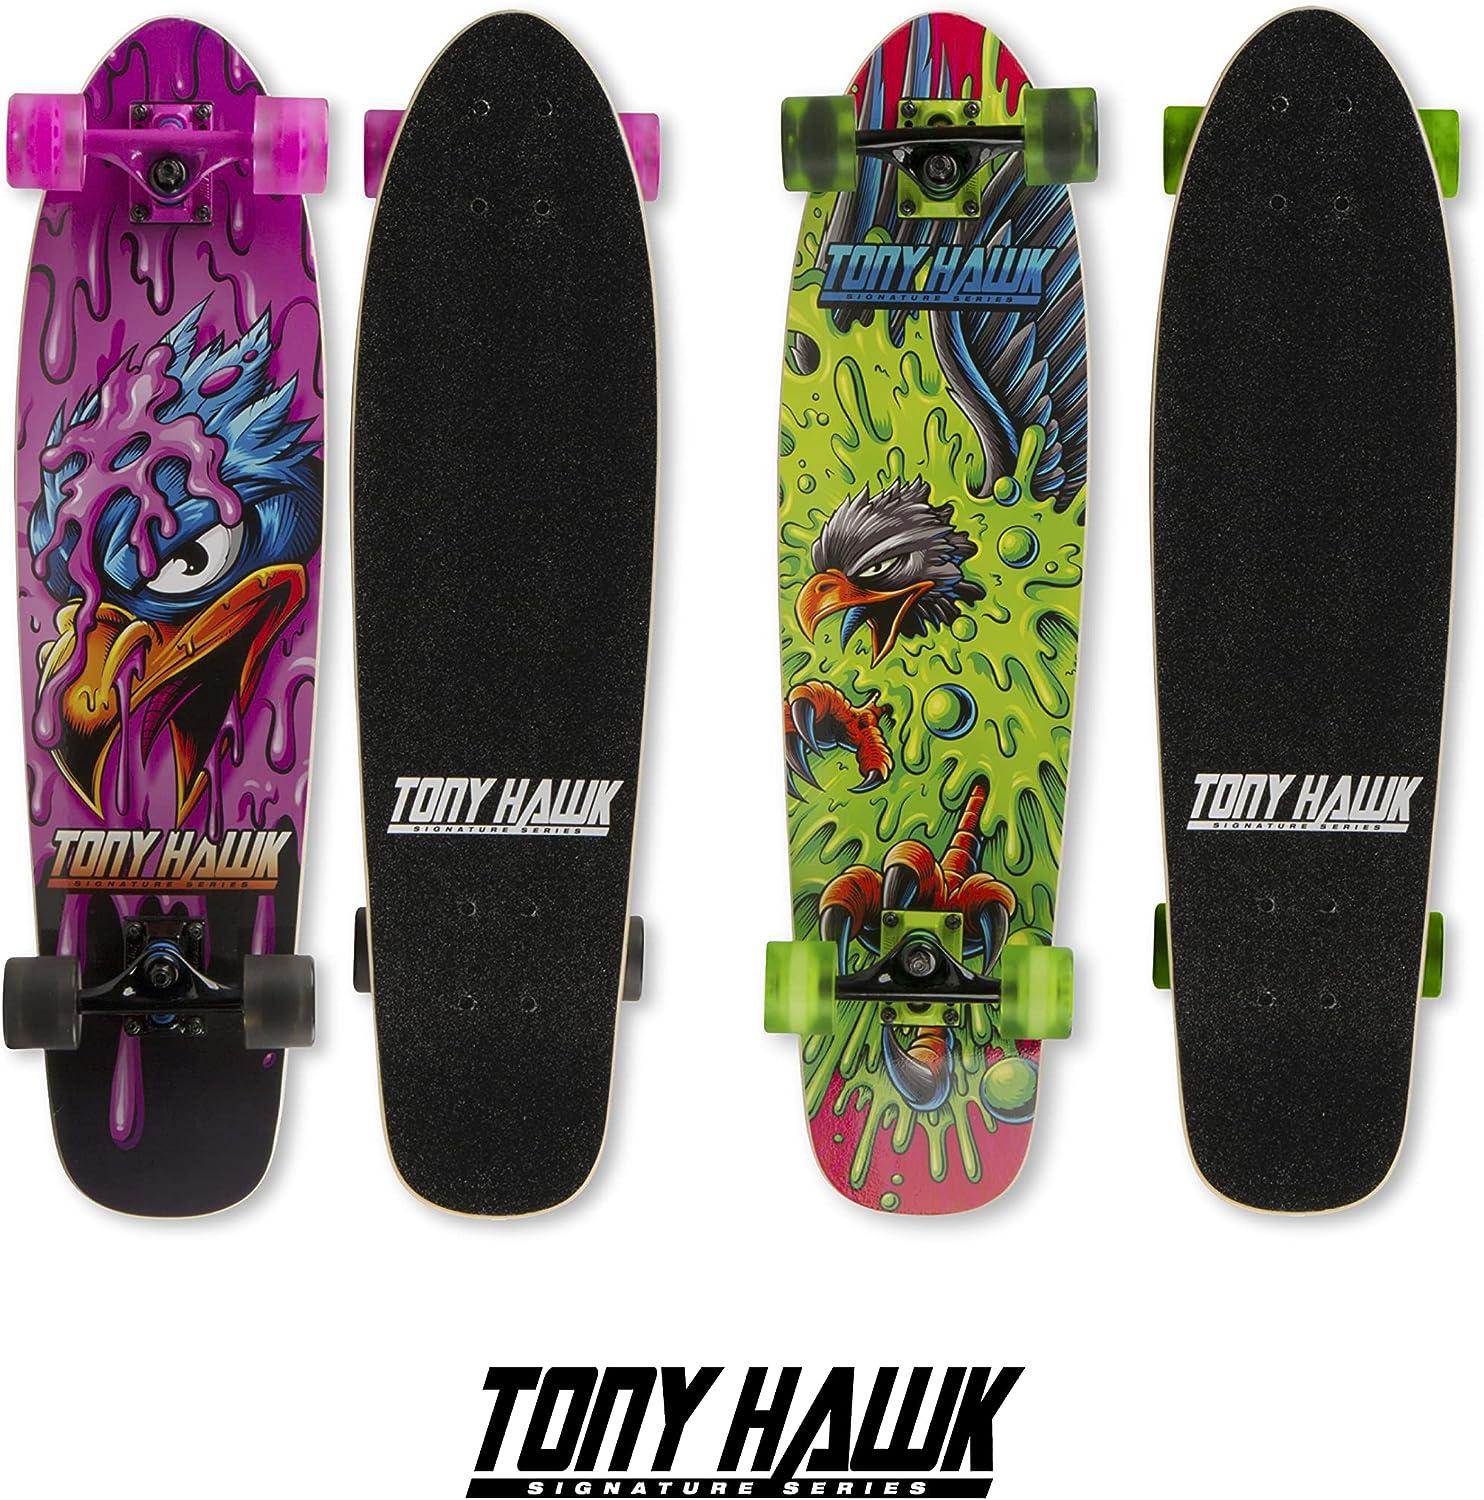 Tony Hawk 31 Inch Skateboard, Tony Hawk Signature Series 4, 9-Ply Maple  Deck Skateboard for Cruising, Carving, Tricks and Downhill